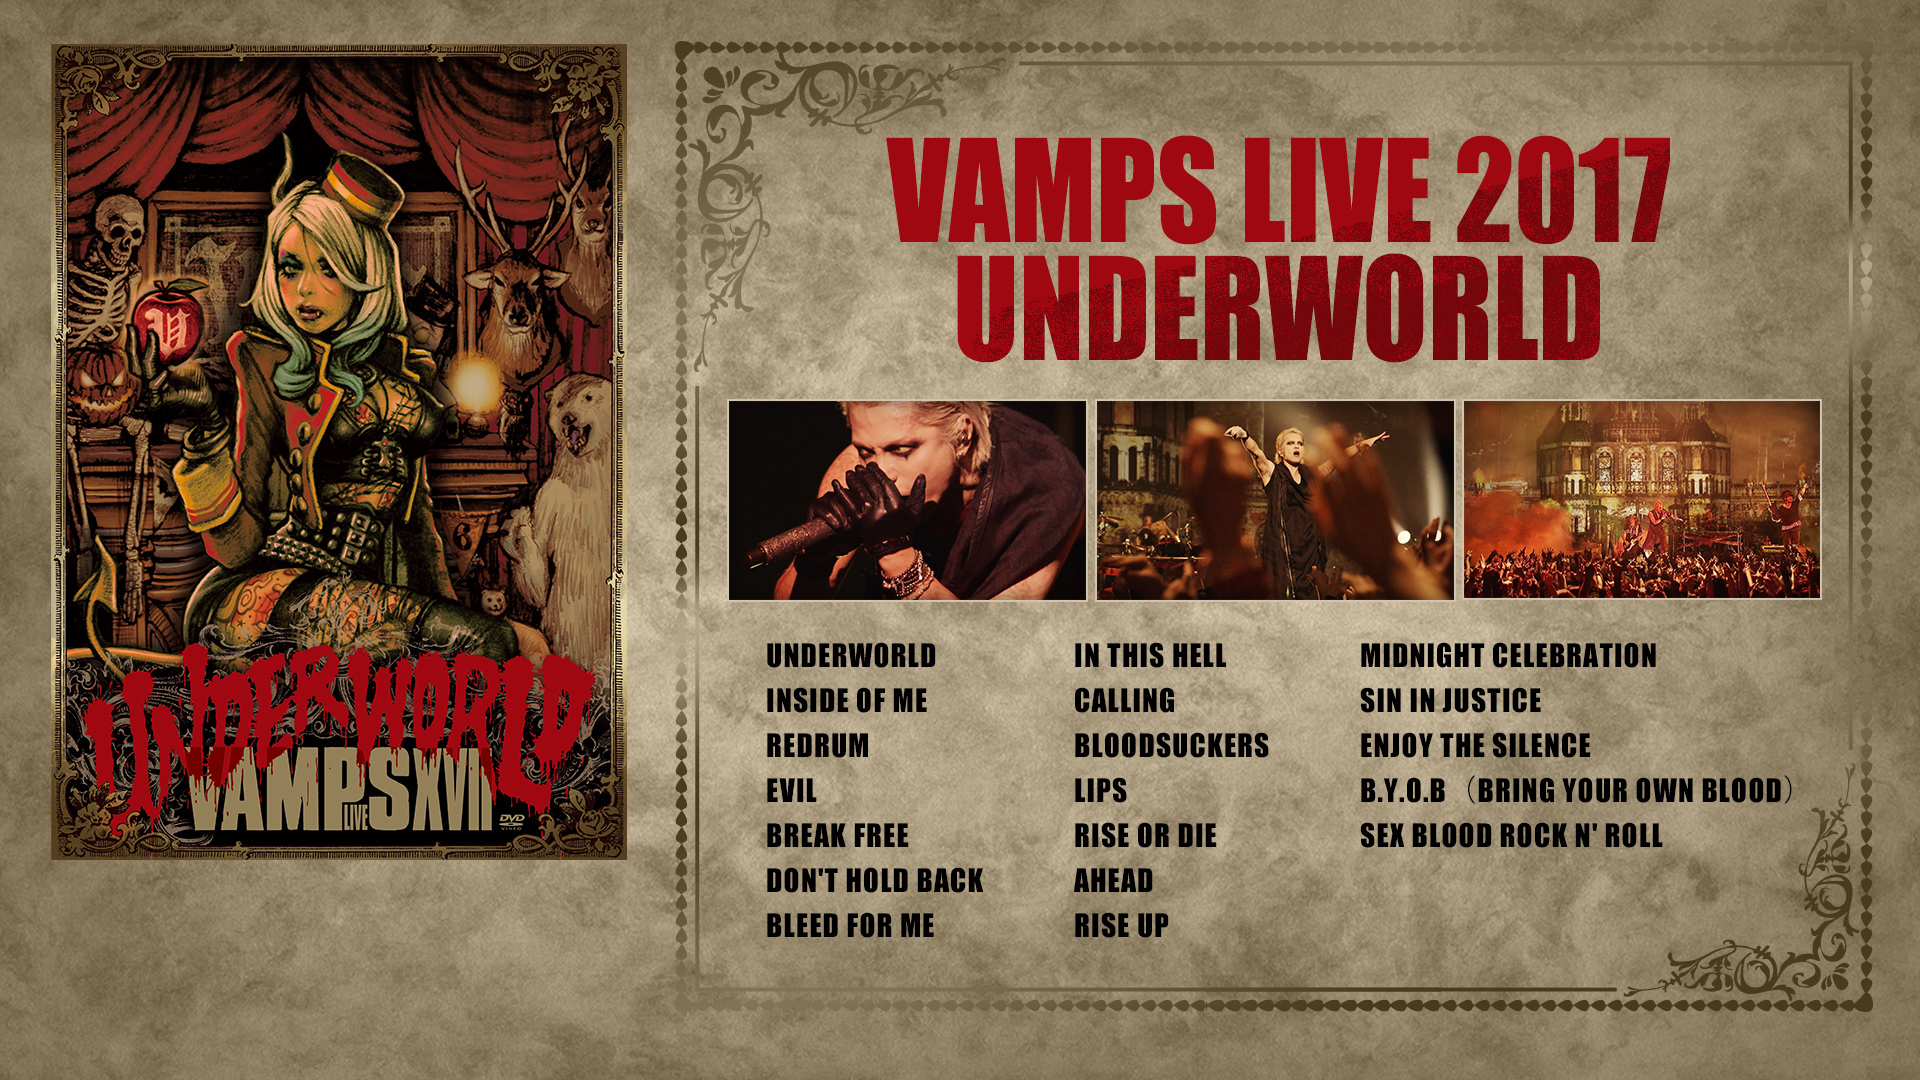 VAMPS LIVE 2017 UNDERWORLD